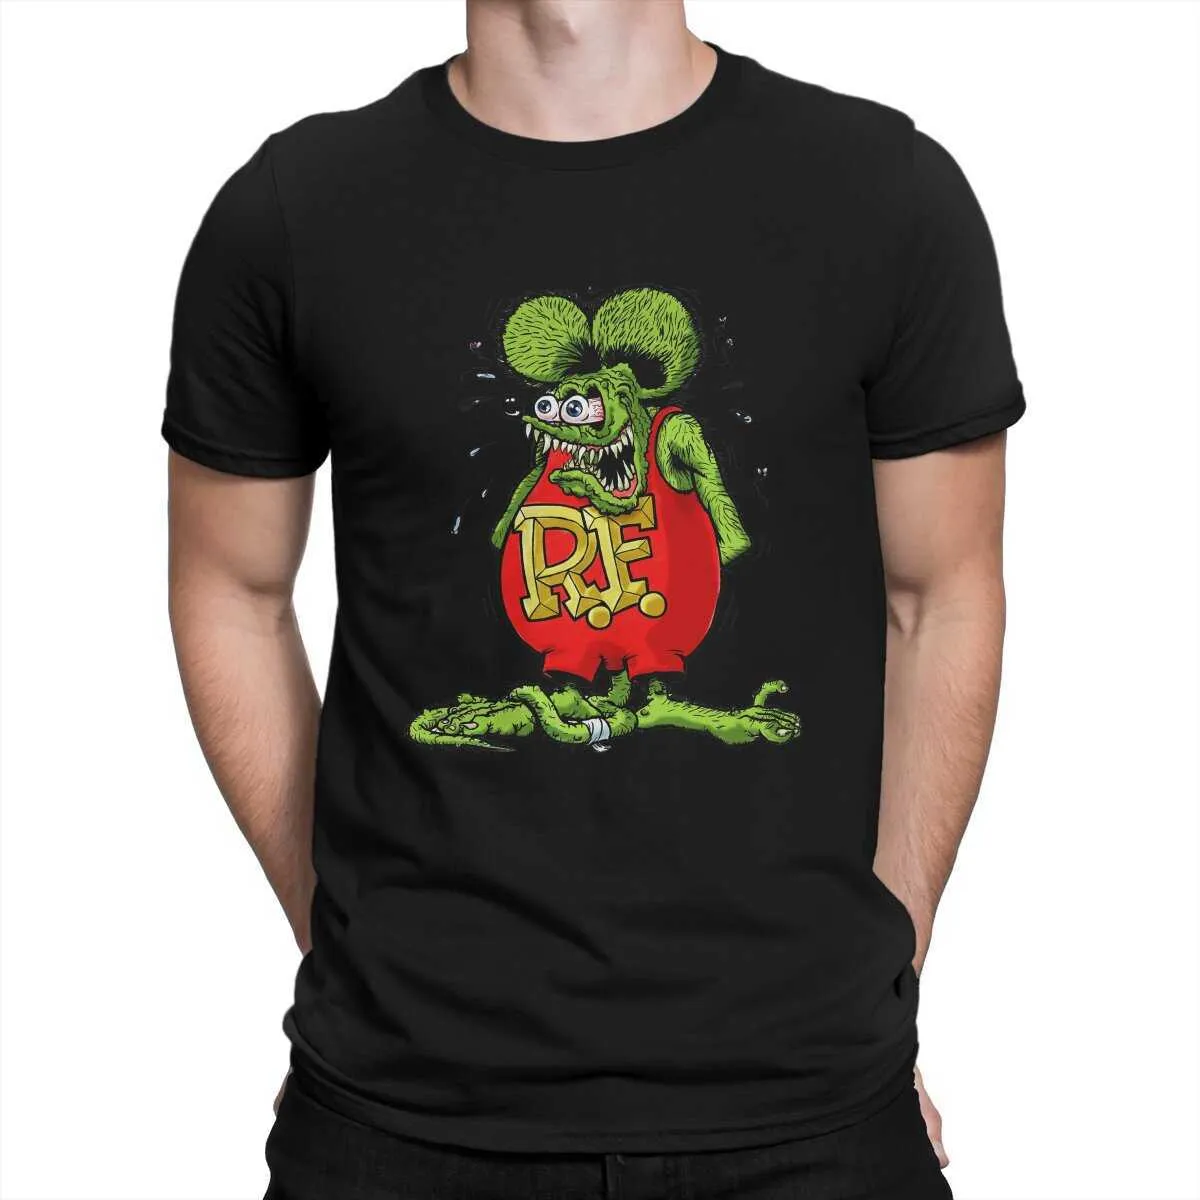 Camisetas masculinas contos do rato fink John Goodman tshirt masculina camiseta de moda verde harajuku moletons novas tendências 022223h